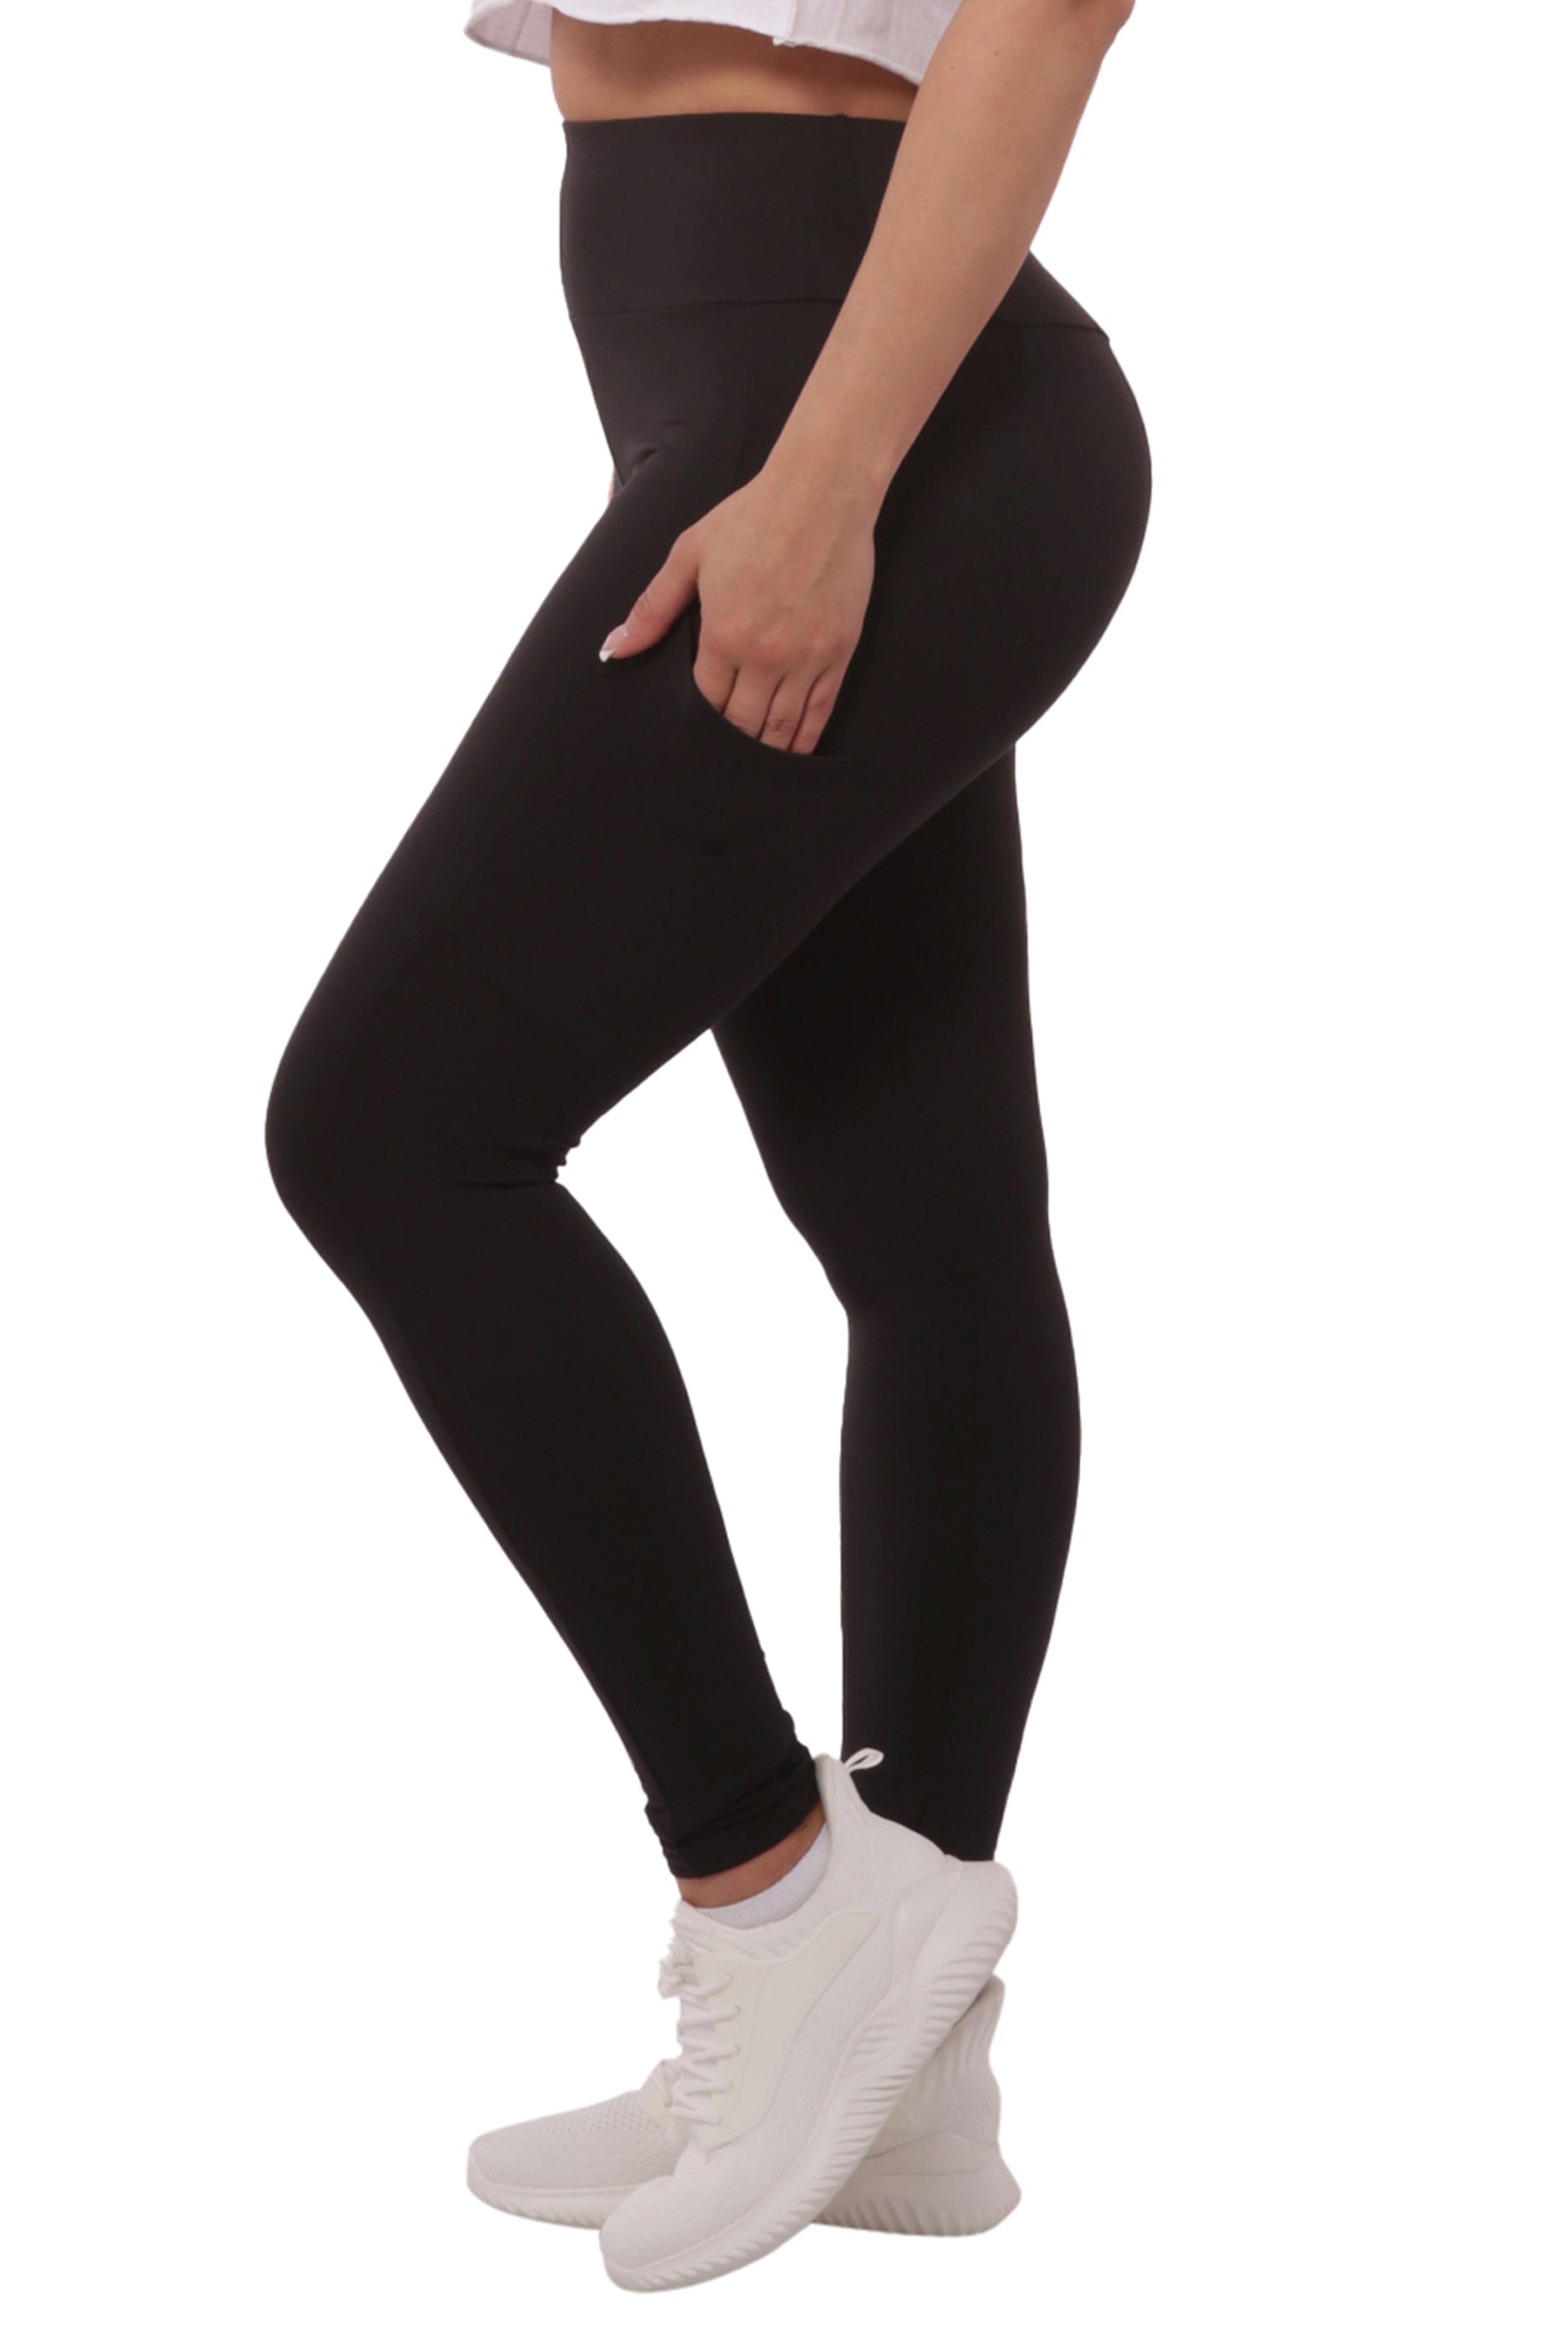 Wholesale Womens High Waist Fleece Lined Leggings With Side Pockets - Black - S&G Apparel